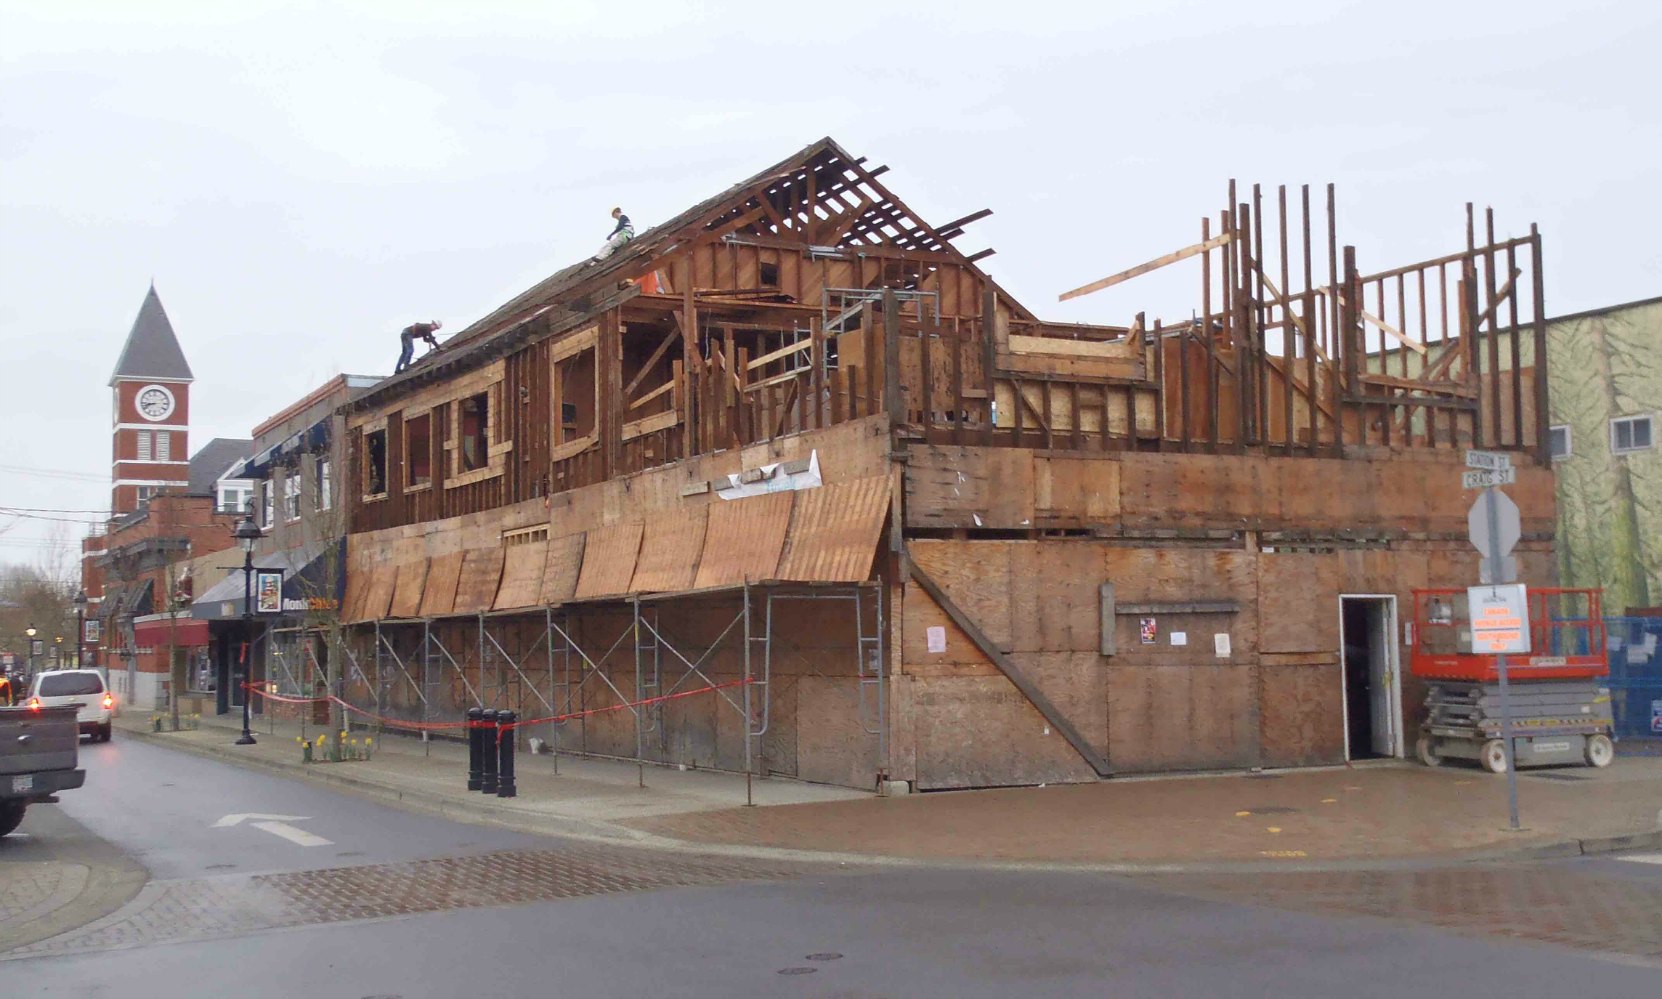 Duncan Emporium Building demolition, Station Street and Craig Street, March 2015